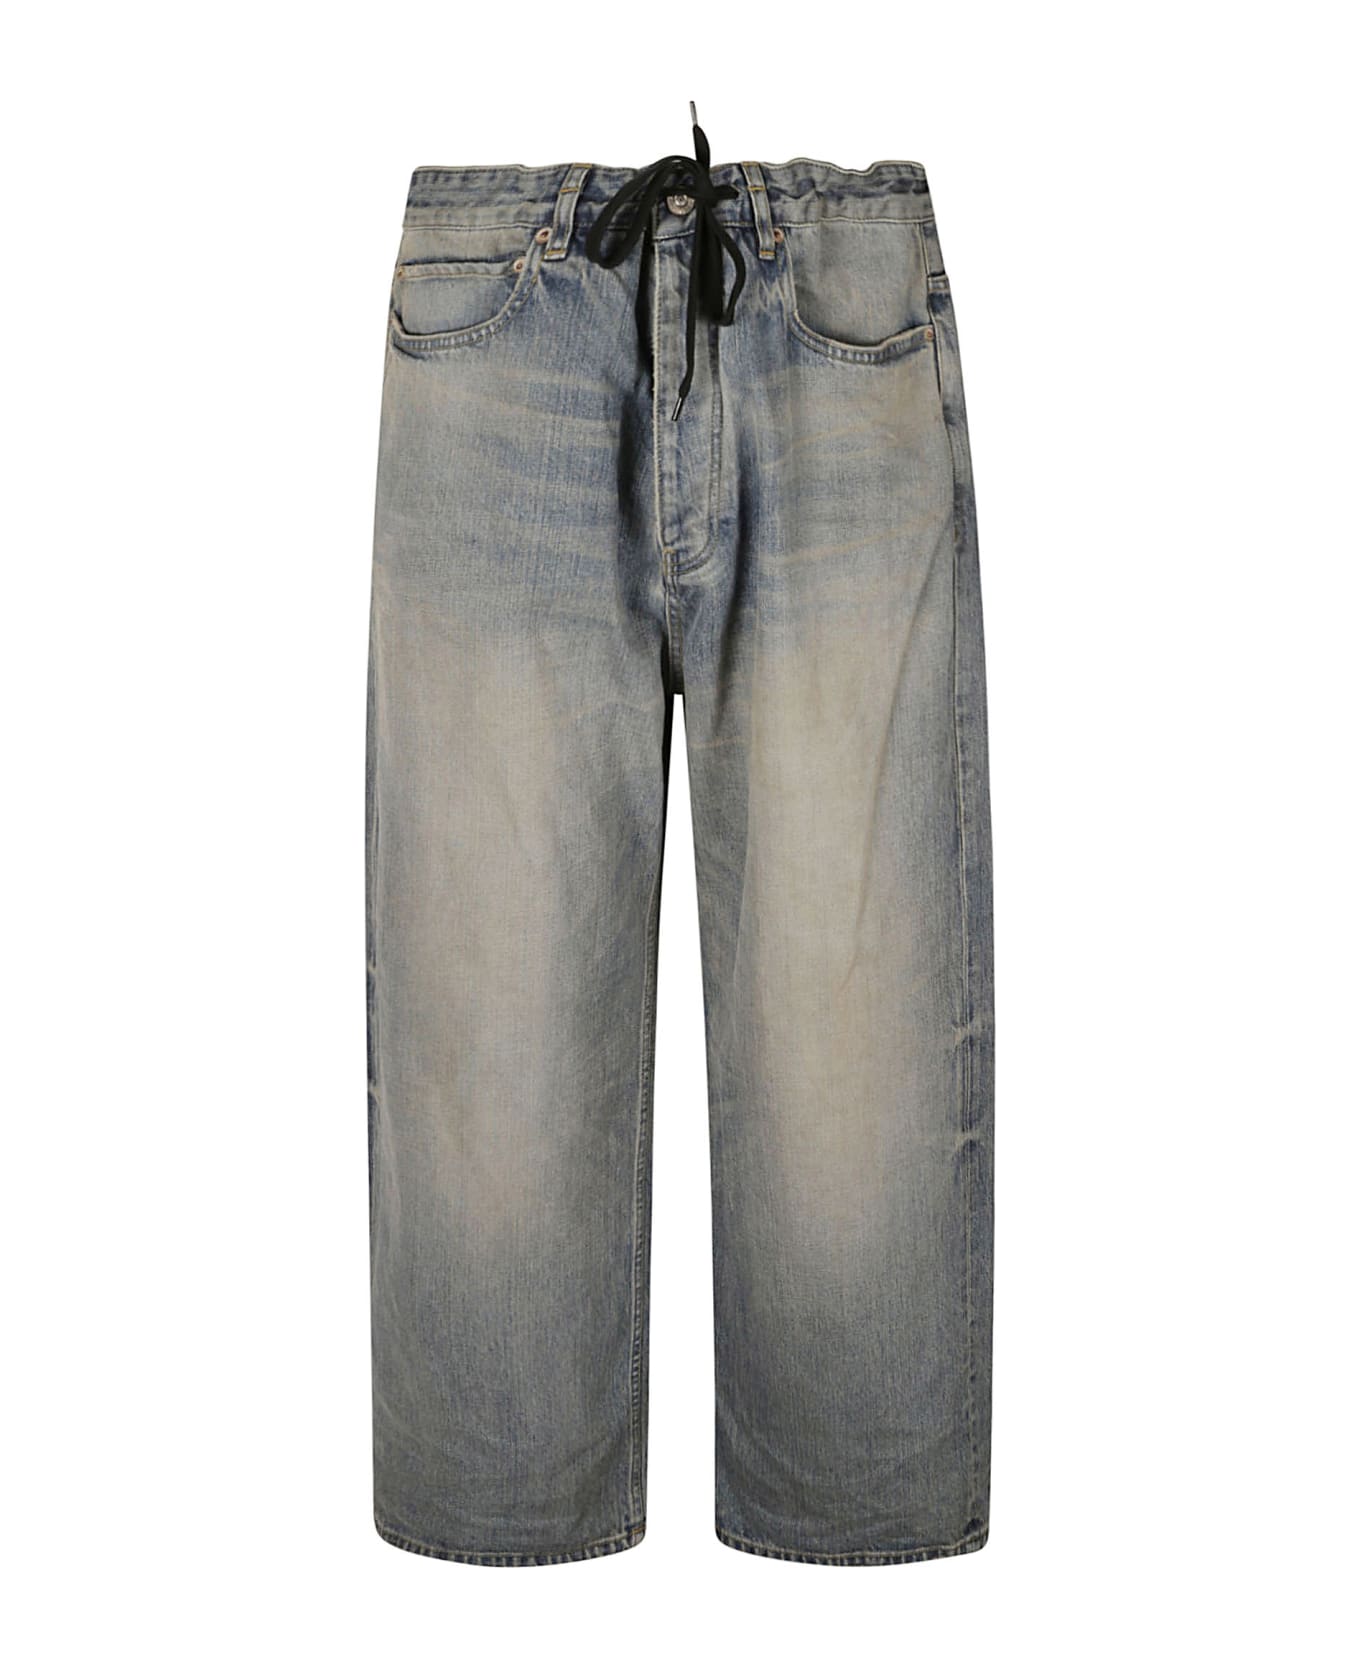 Balenciaga Baggy Cropped Jeans - Outback Bllue